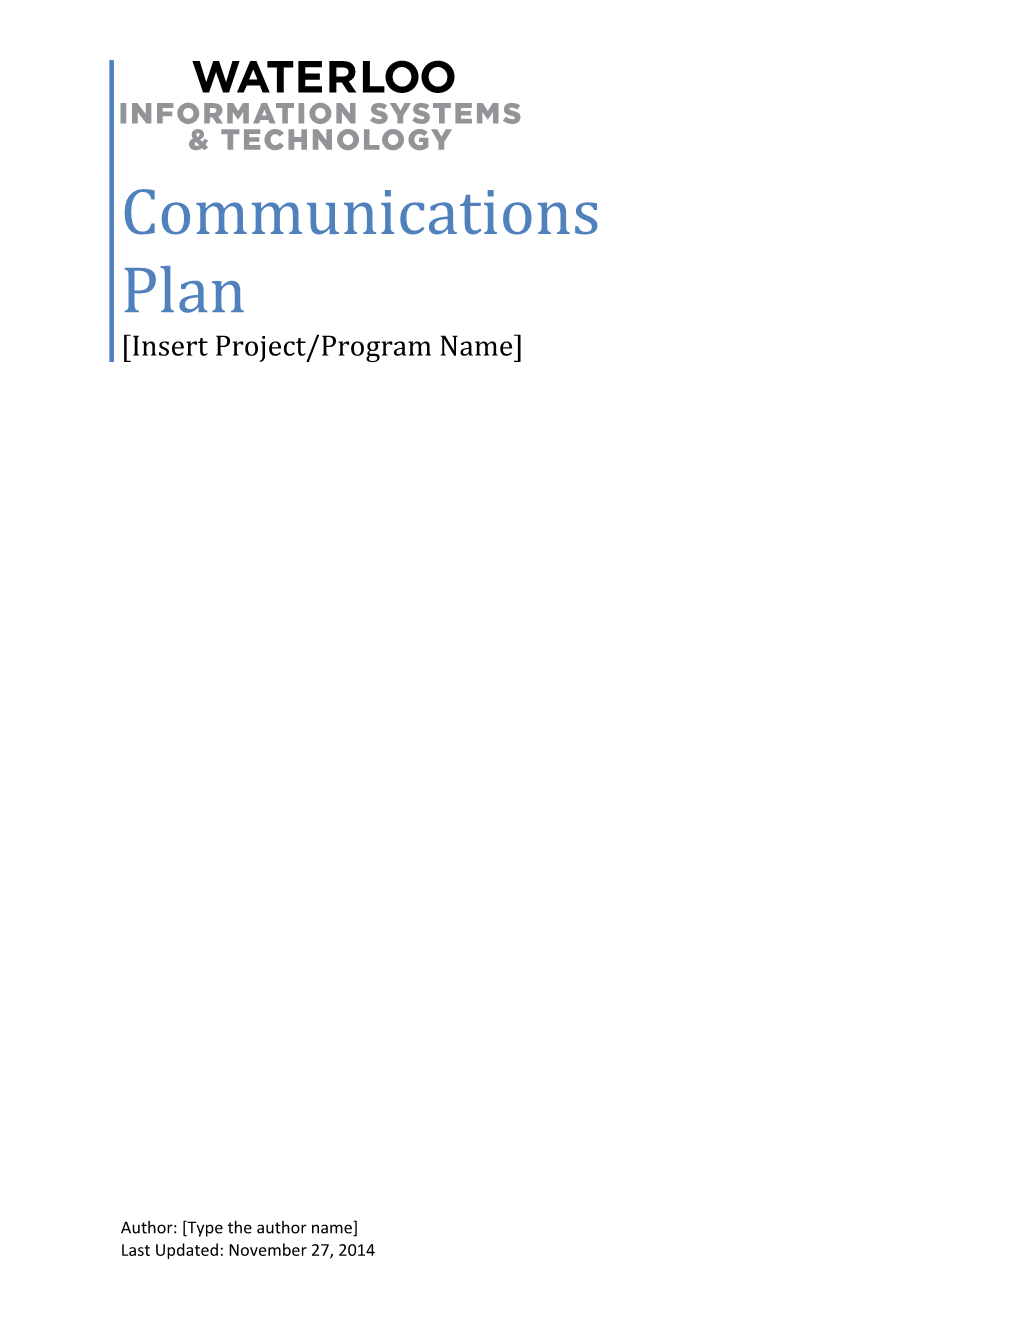 Communications Plan Insert Project/Program Name